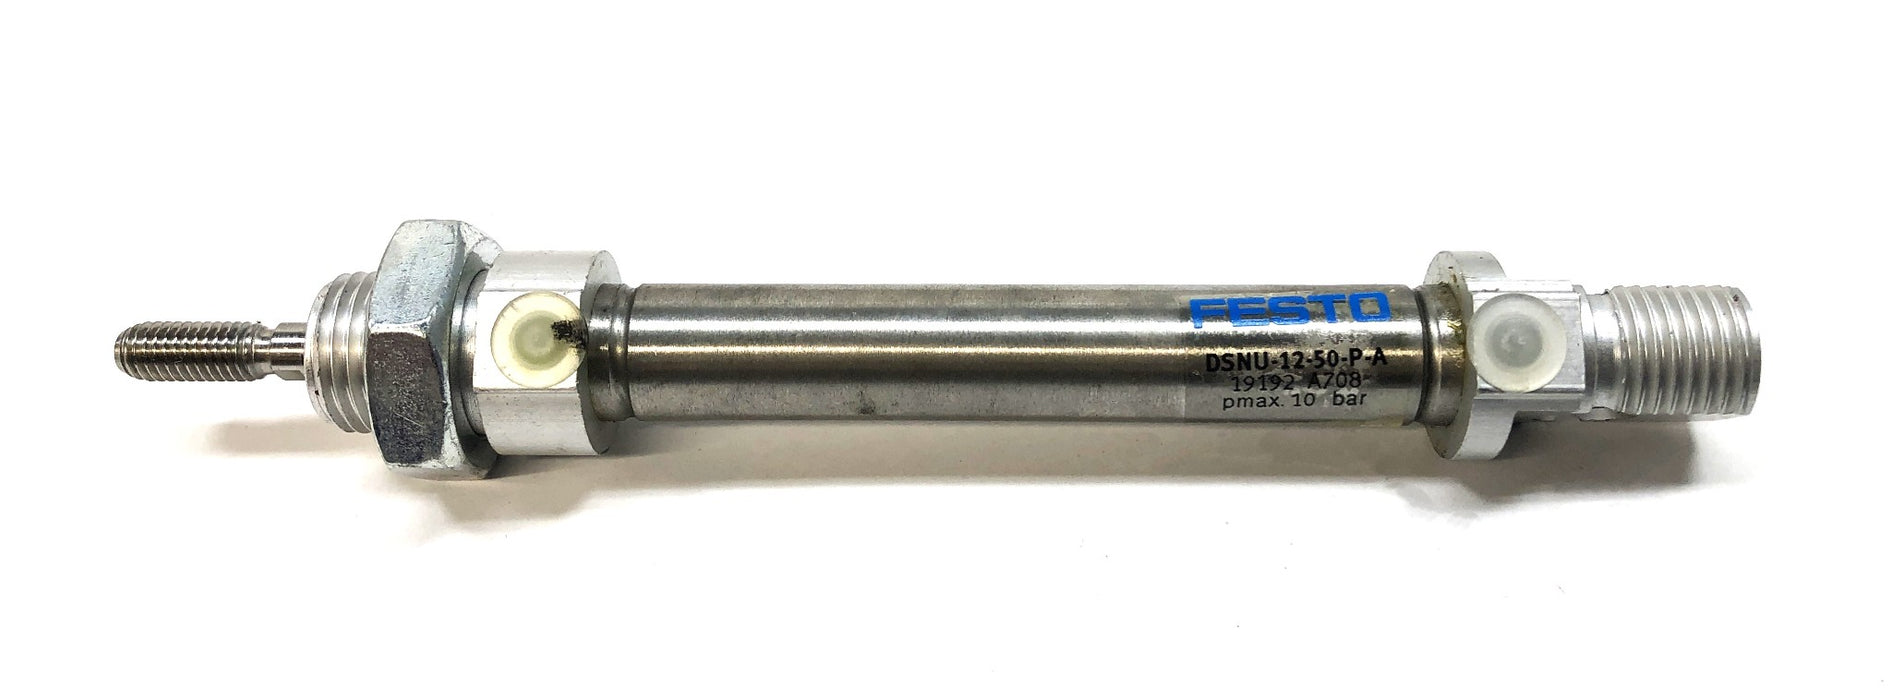 Festo Standard Pneumatic Air Cylinder DSNU-12-50-P-A (19192) NOS